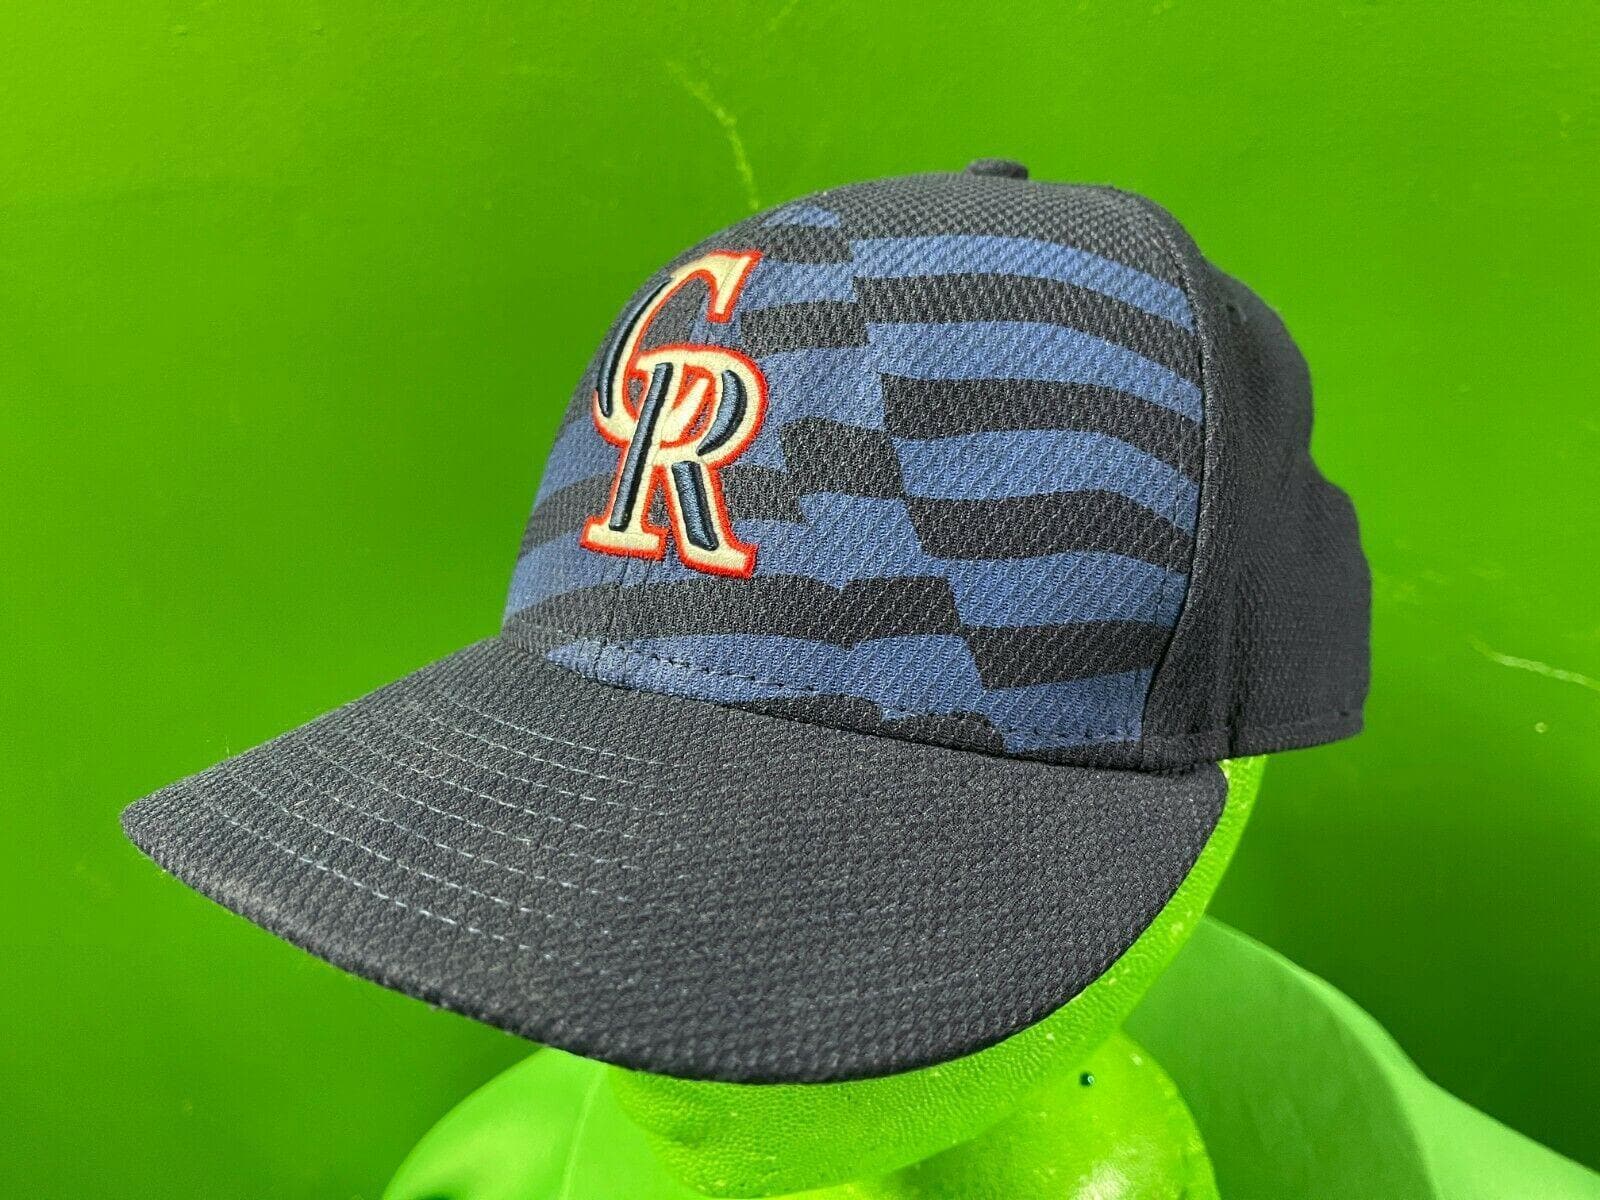 MLB Colorado Rockies New Era 59FIFTY Baseball Cap/Hat Stars-Stripes 7-1/8